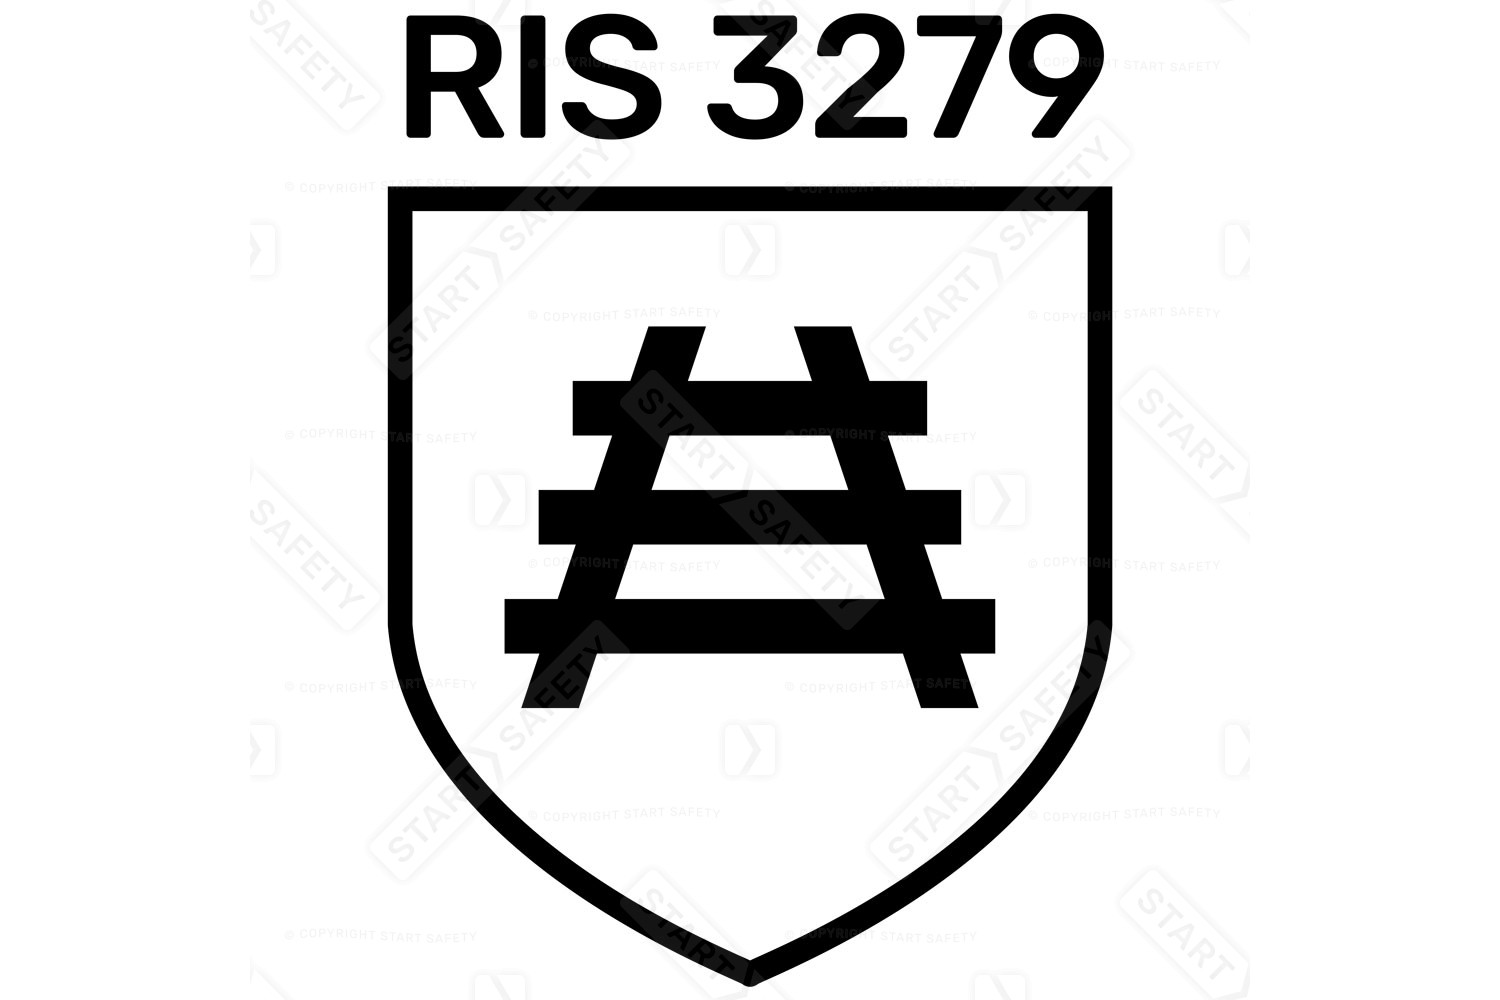 RIS 3279 Railway Standard Symbol